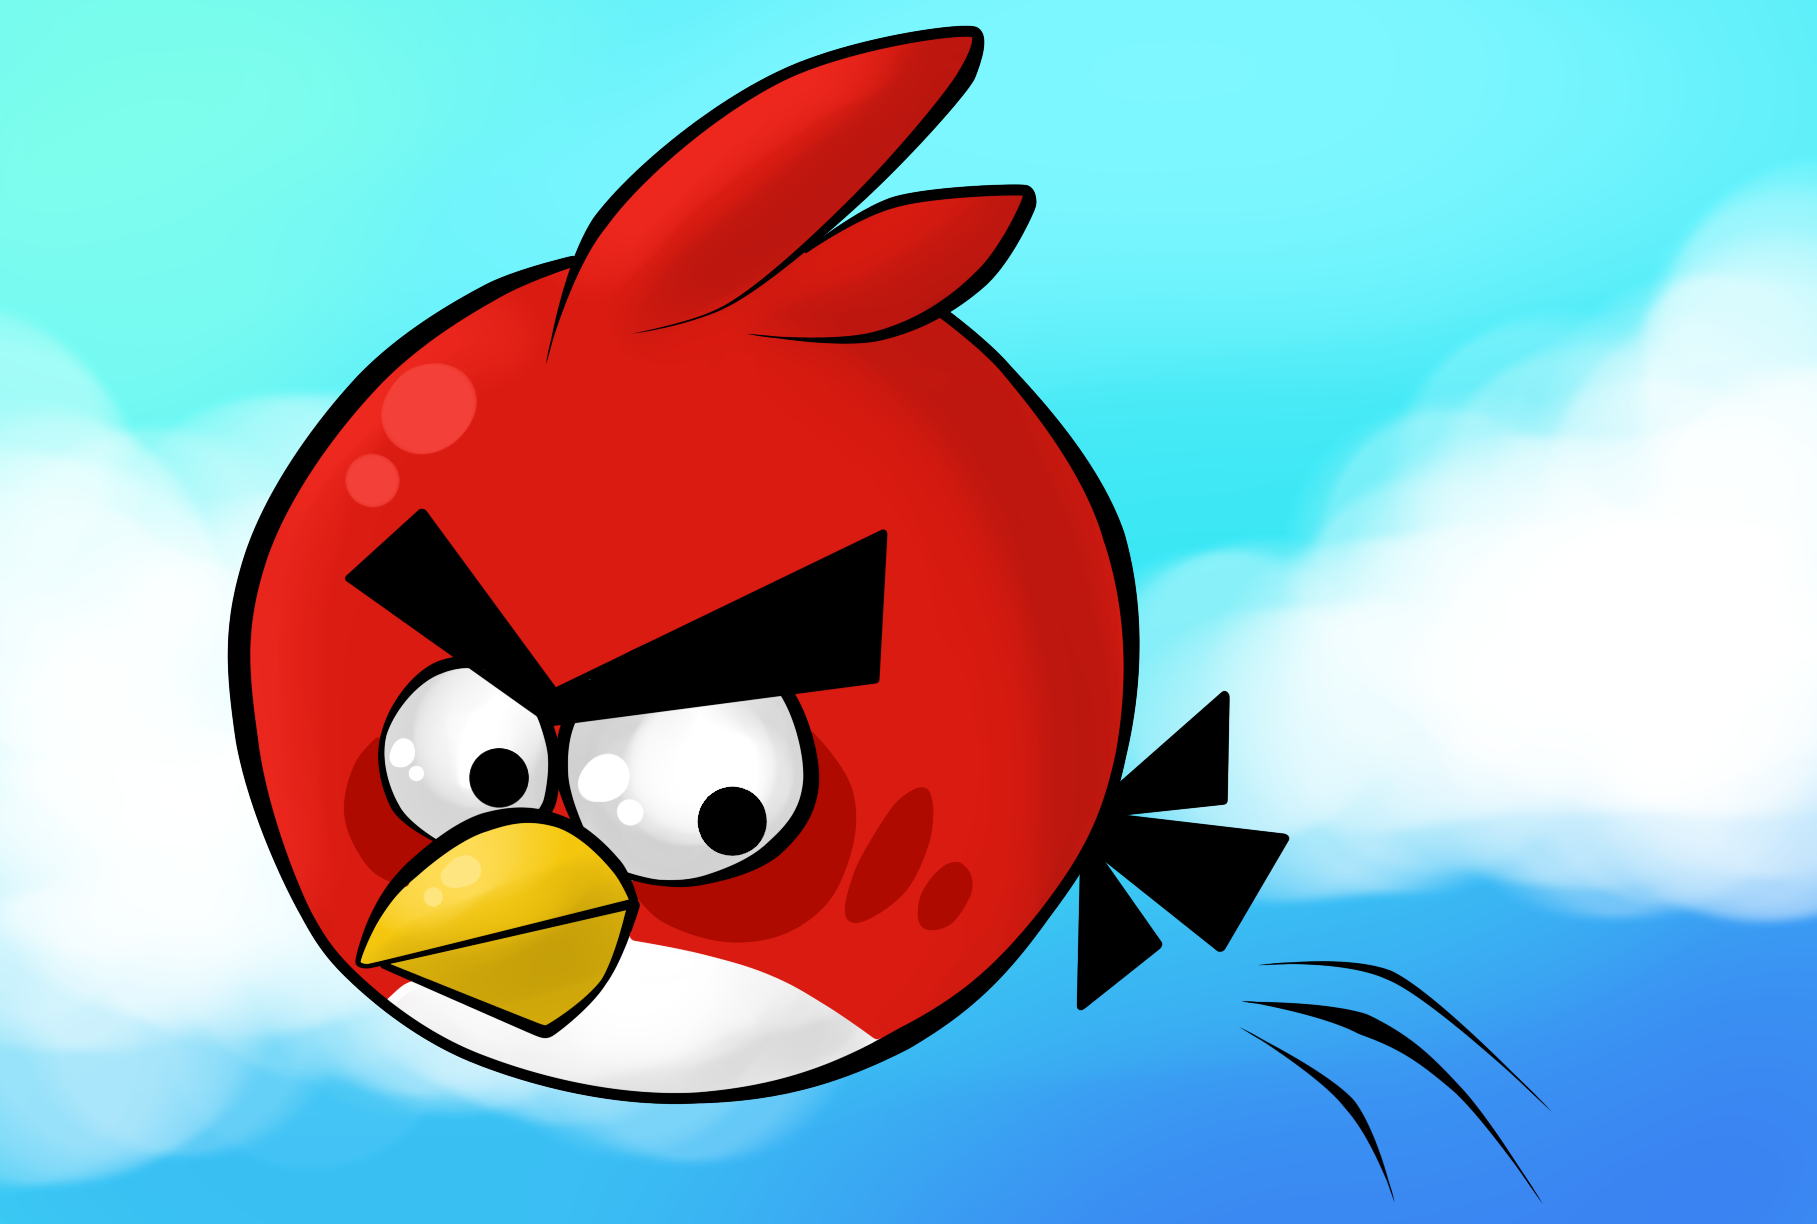 Angry Birds HD Wallpaper Image for Desktop - Cartoons Backgrounds